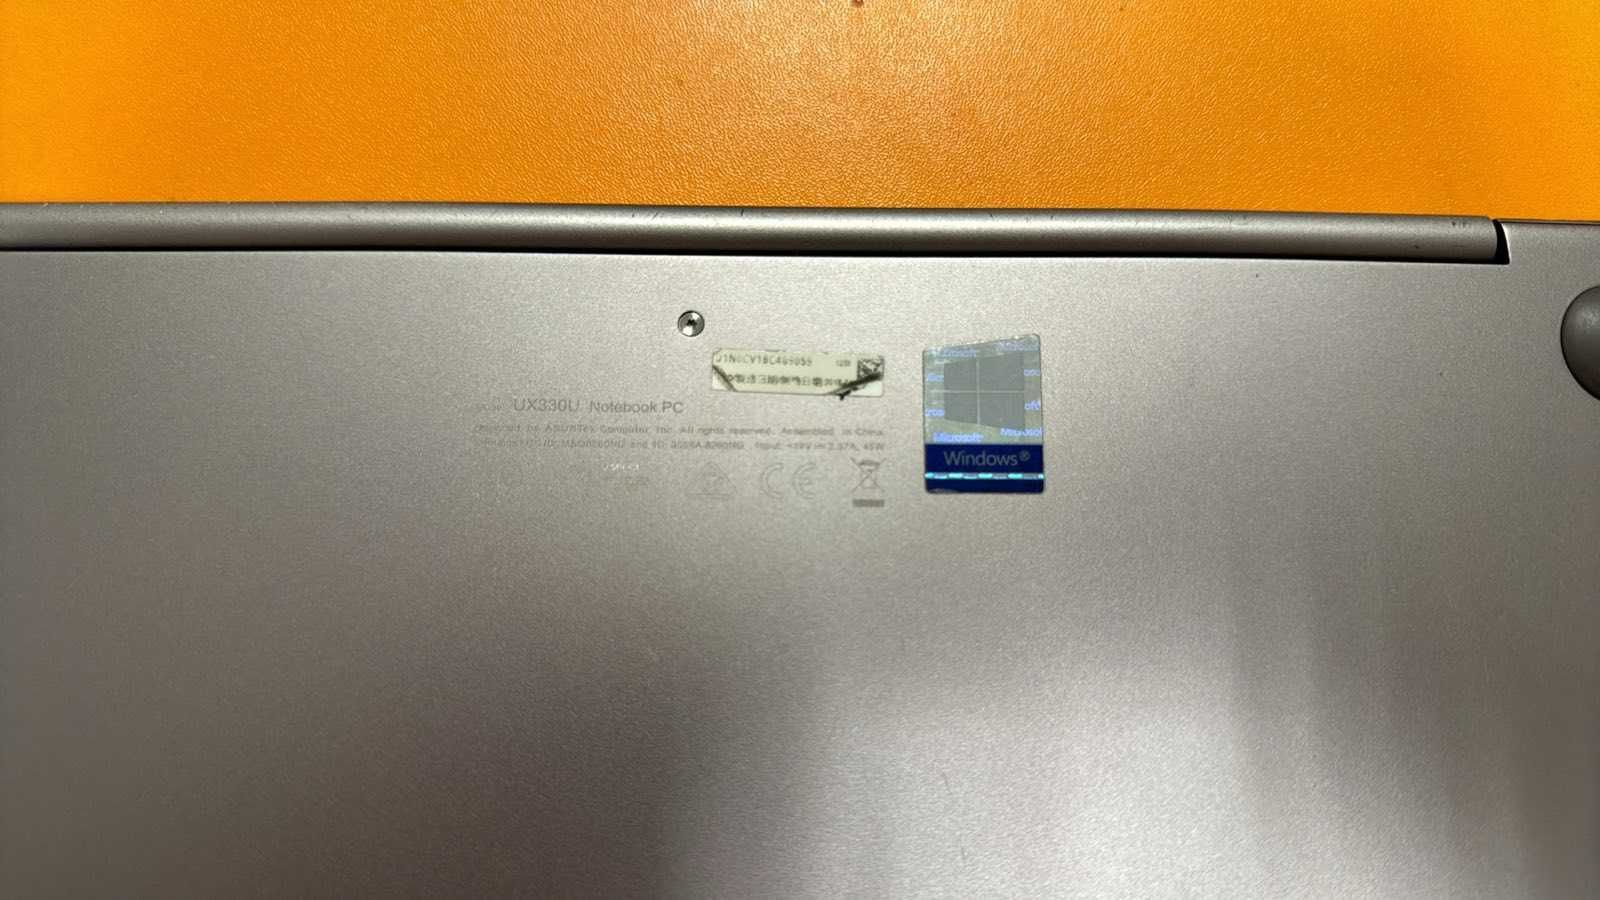 Asus ZenBook 13.3'' UX330U Intel Core i5-7200U 8GB RAM Win 10